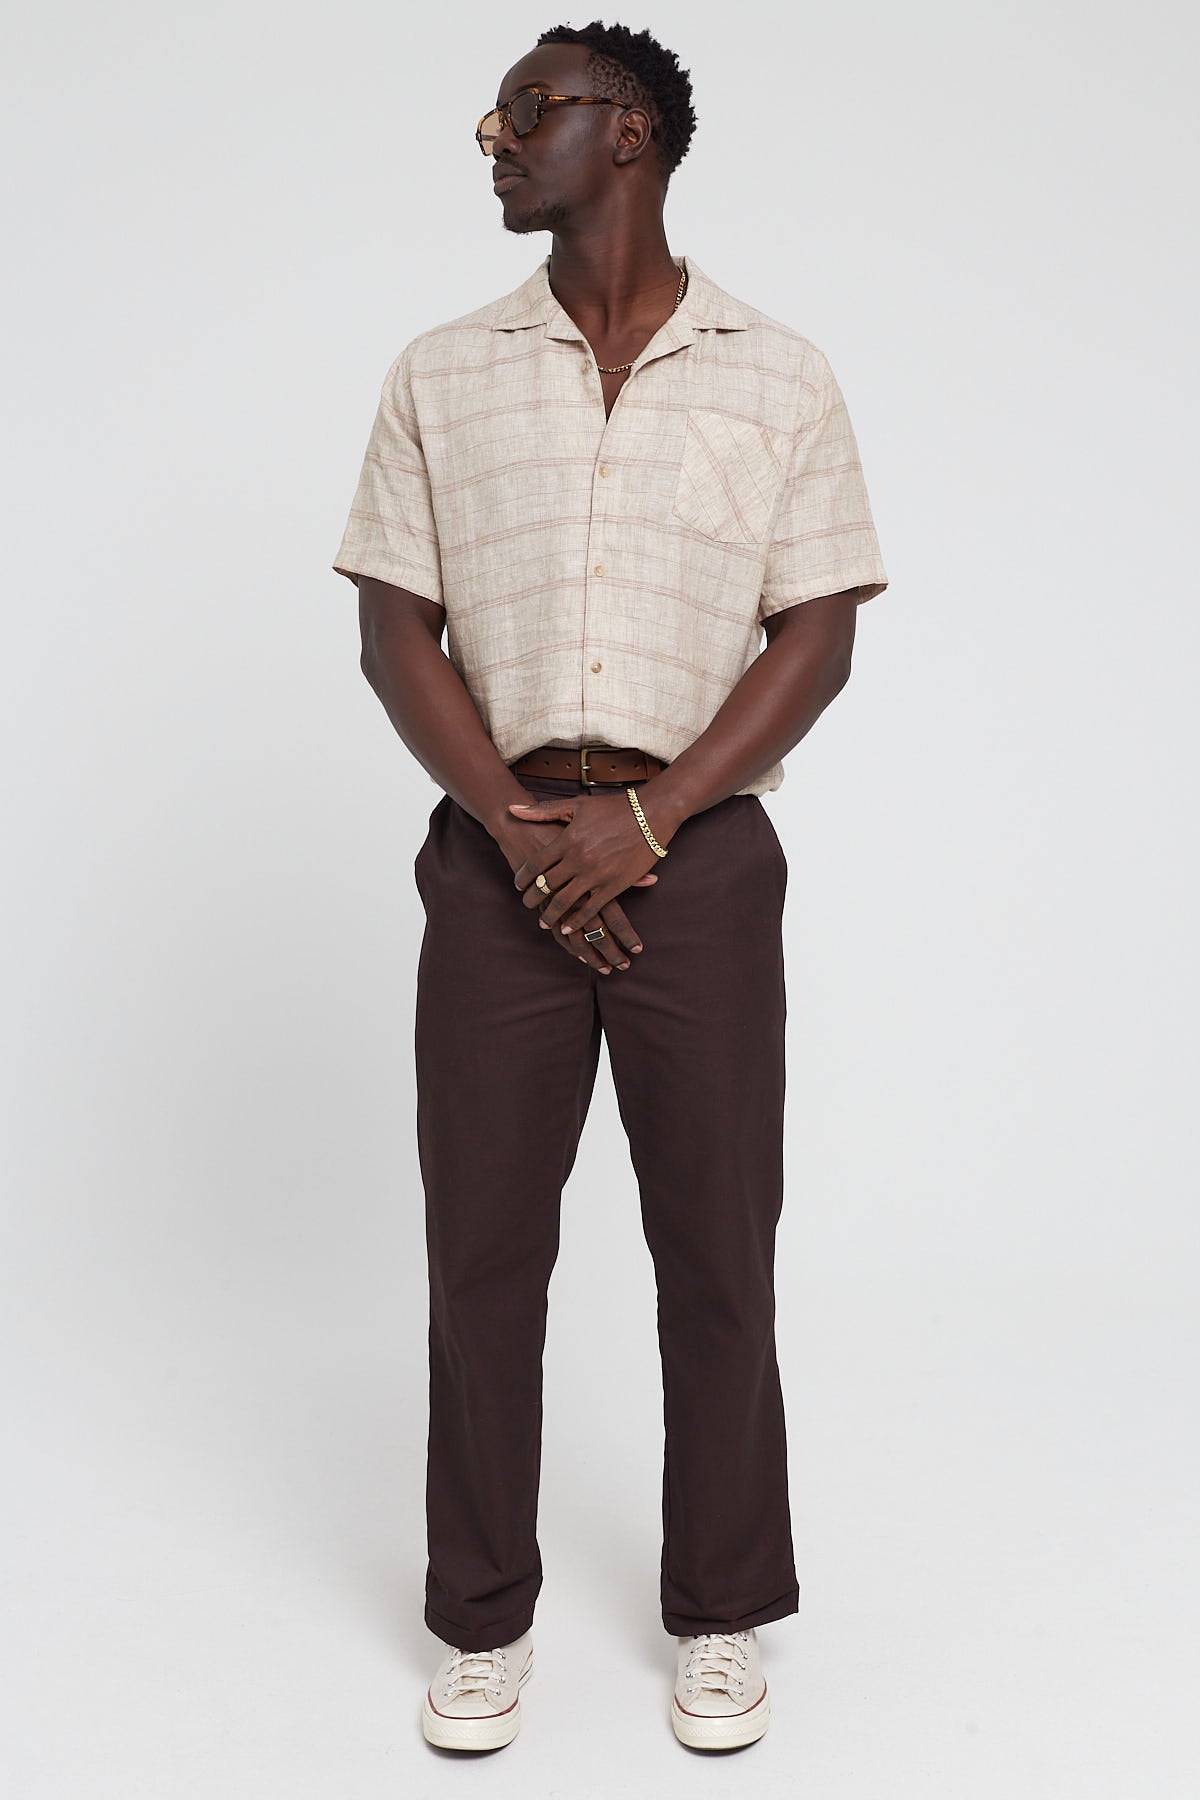 Barney Cools Resort Linen Shirt Bronze Plaid